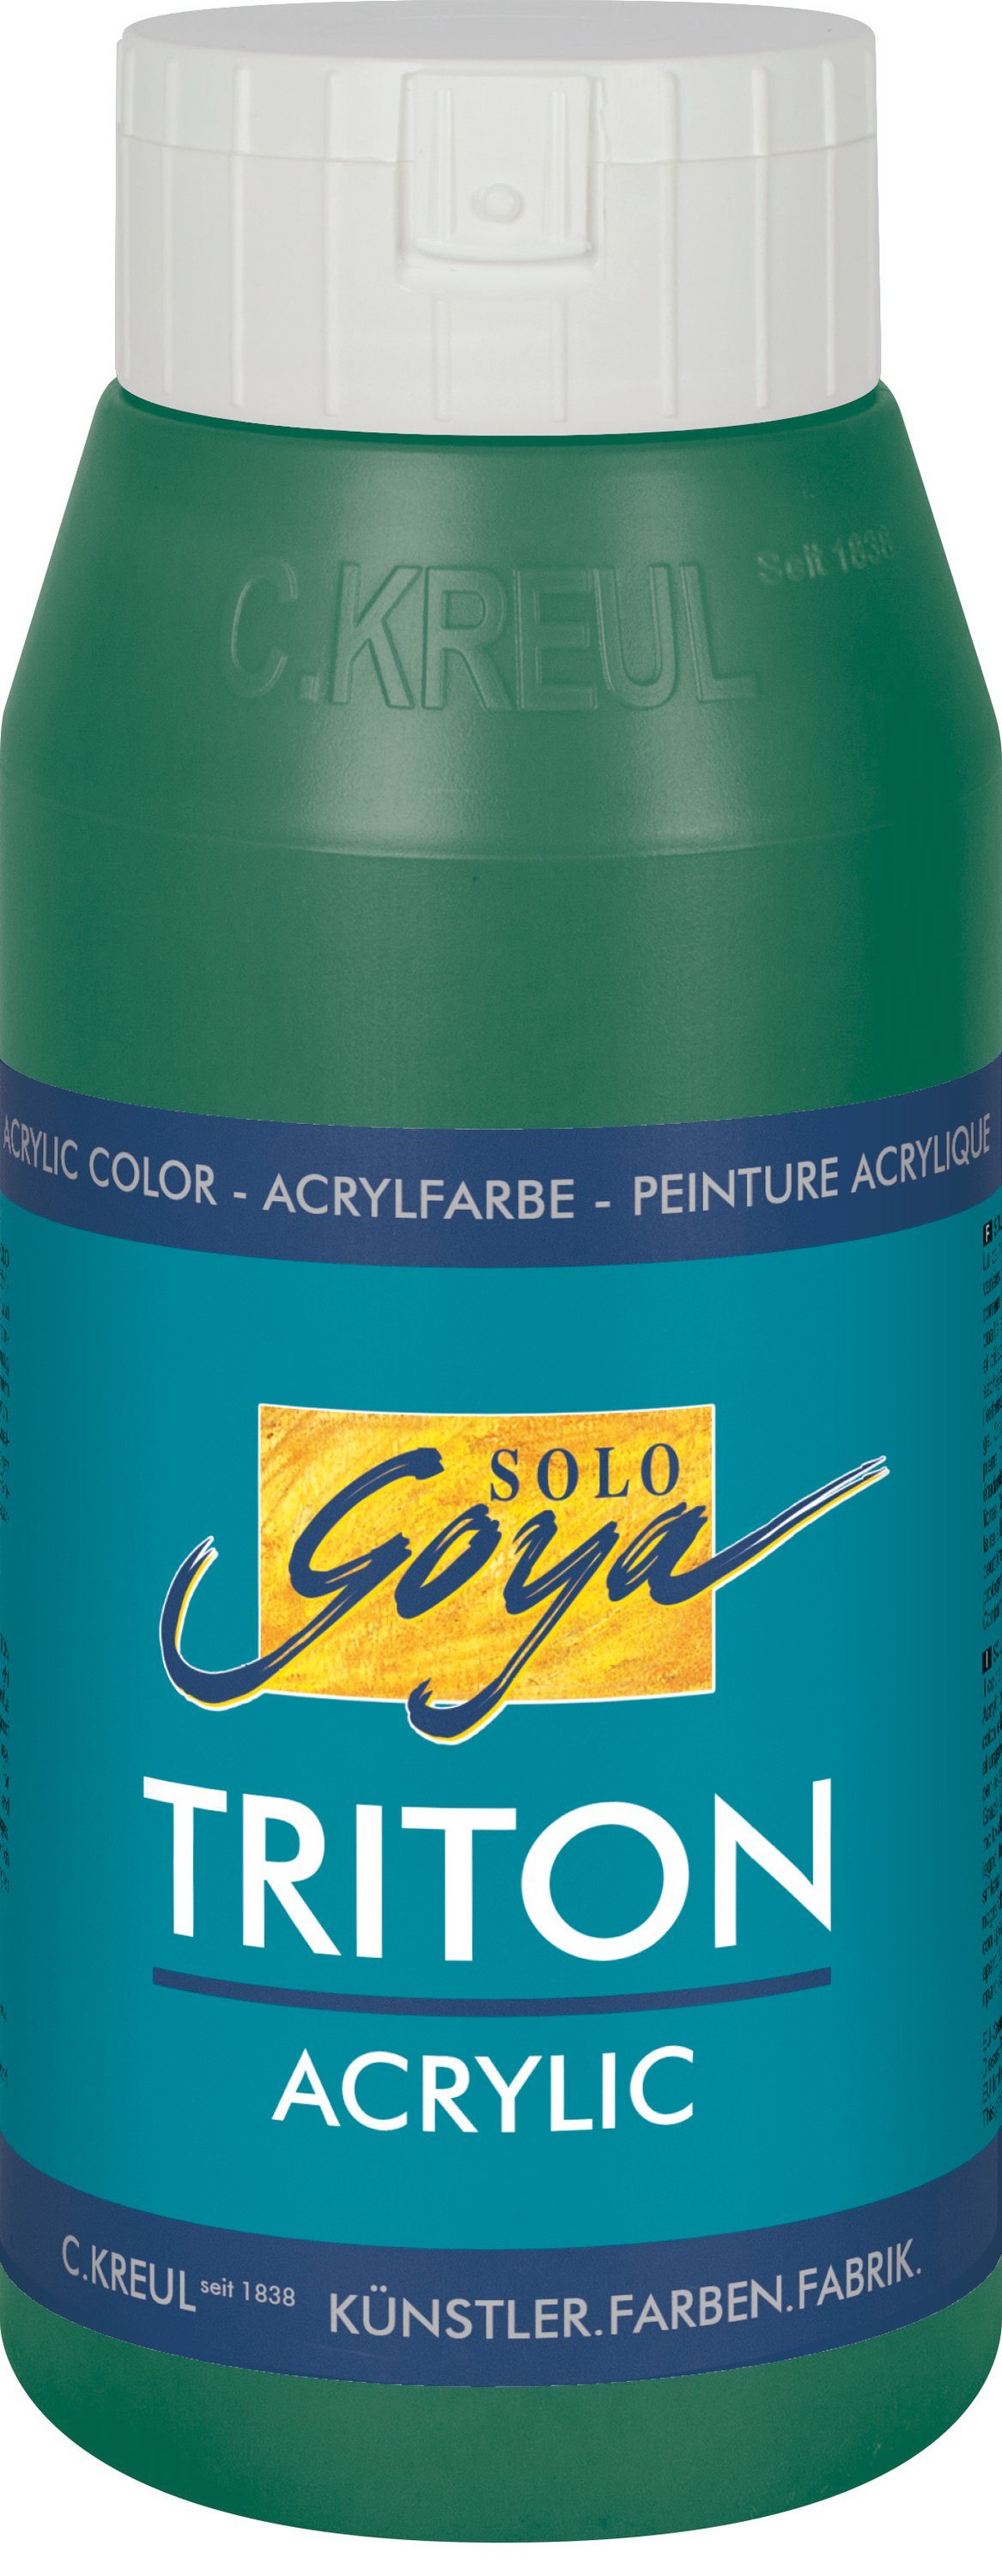 Kreul Acrylfarbe Solo Goya Triton Acrylic, 750 ml Dunkelgrün